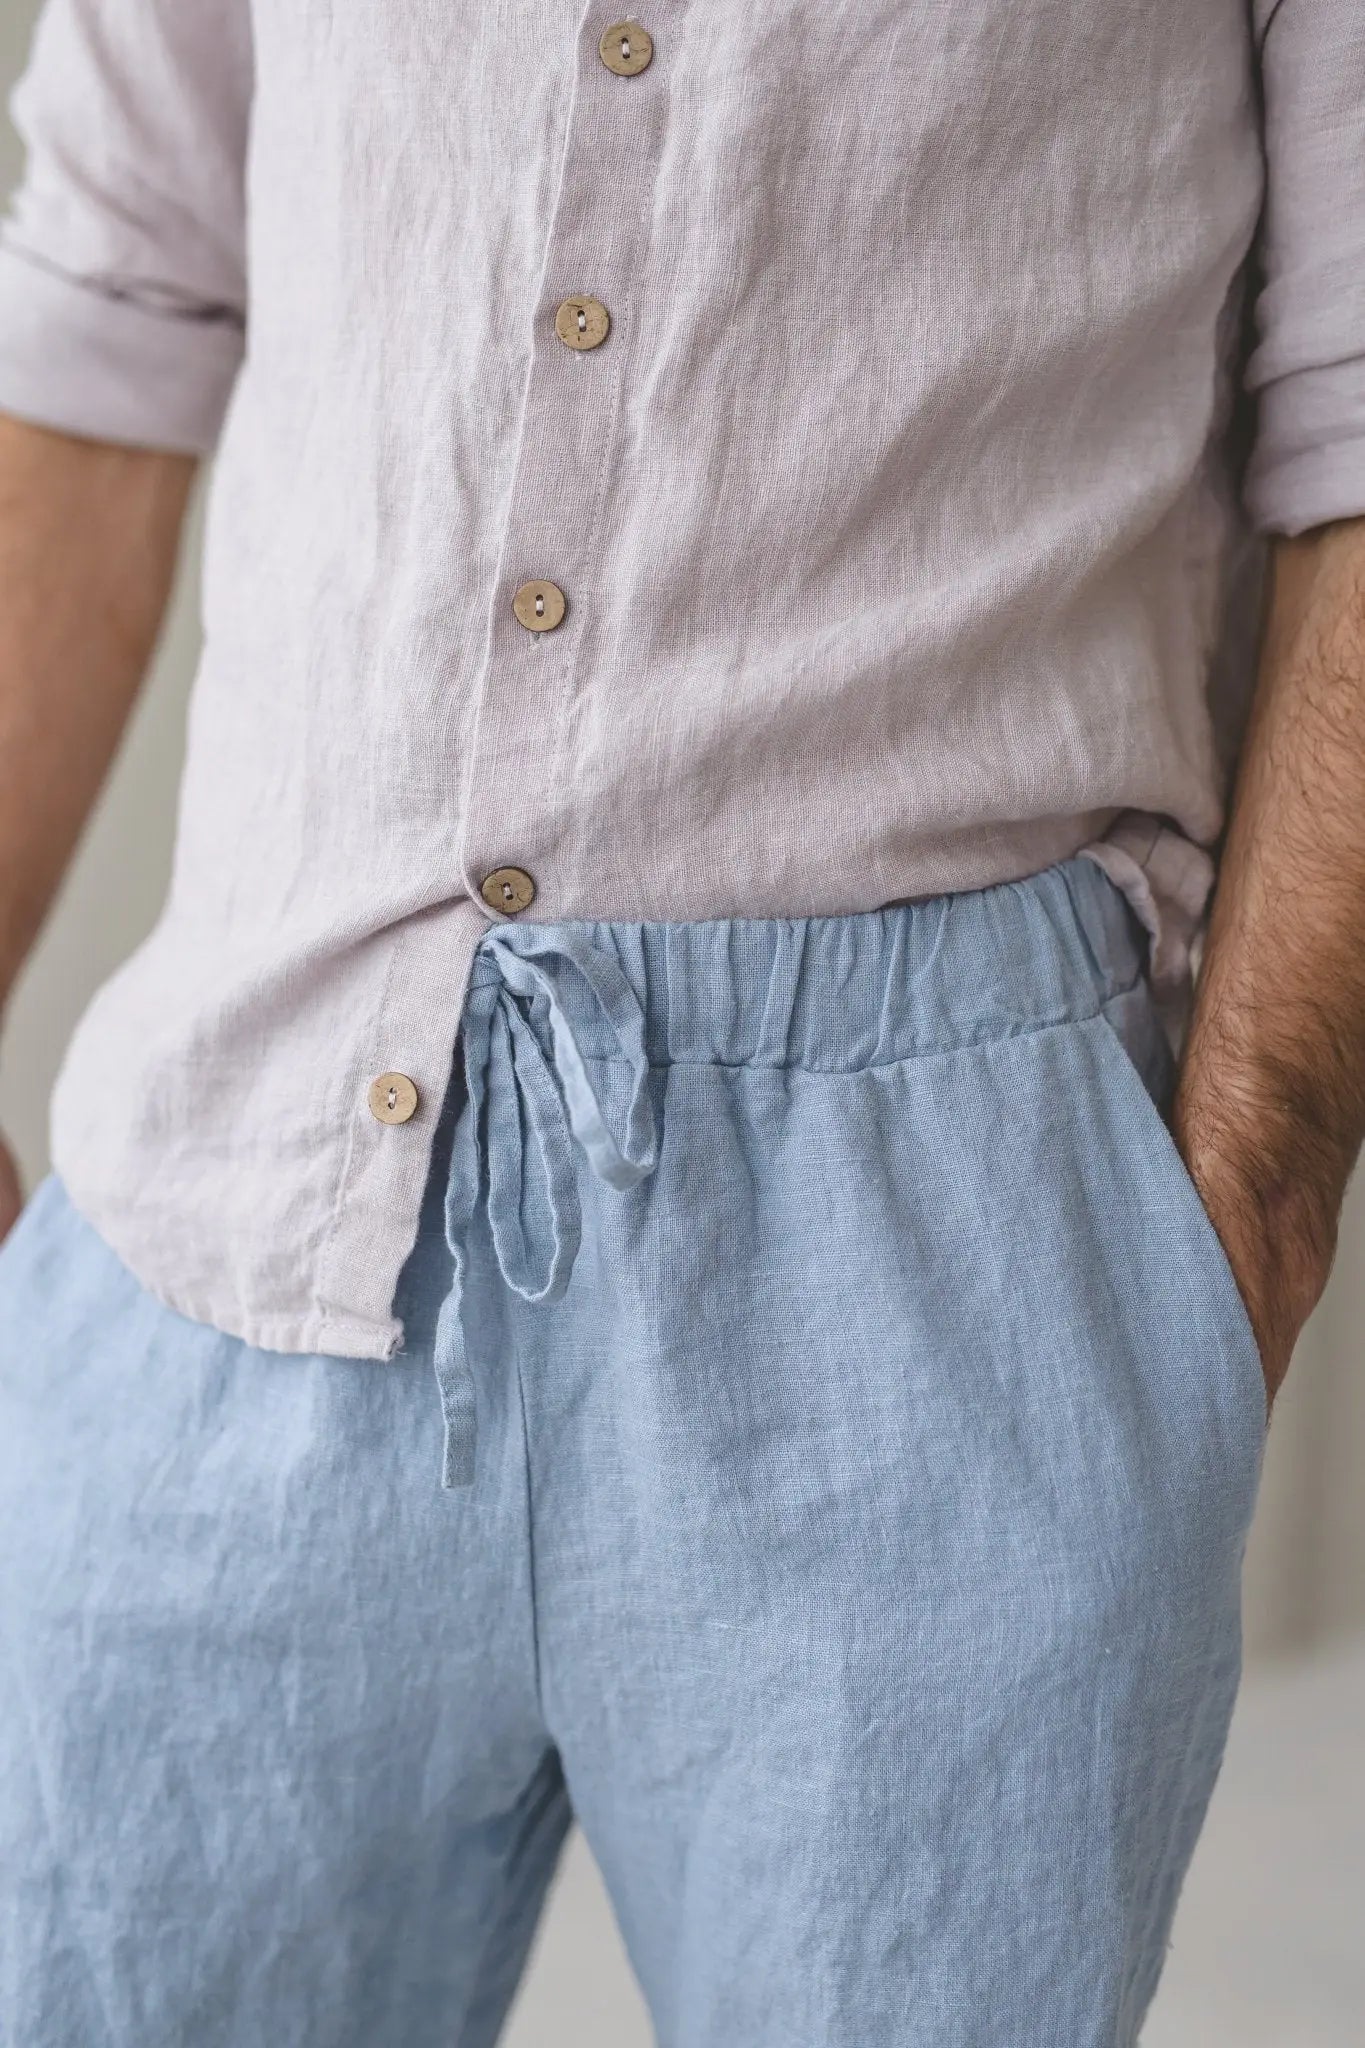 Men's Linen Shorts - Epic Linen luxury linen